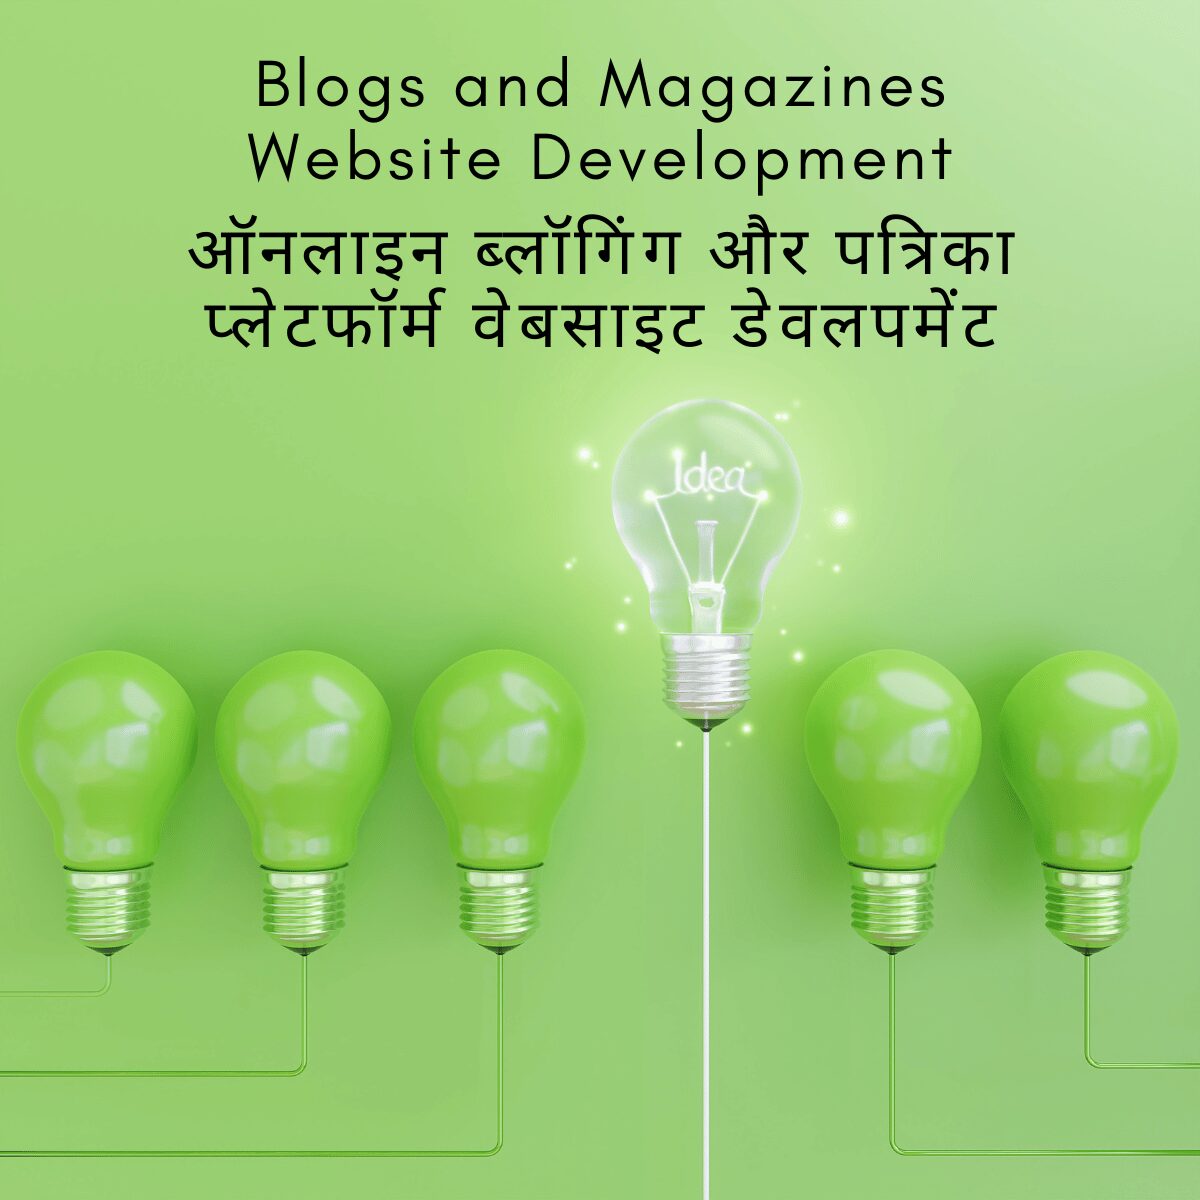 Blogs and Magazines Website Development ऑनलाइन ब्लॉगिंग और पत्रिका प्लेटफॉर्म वेबसाइट डेवलपमेंट